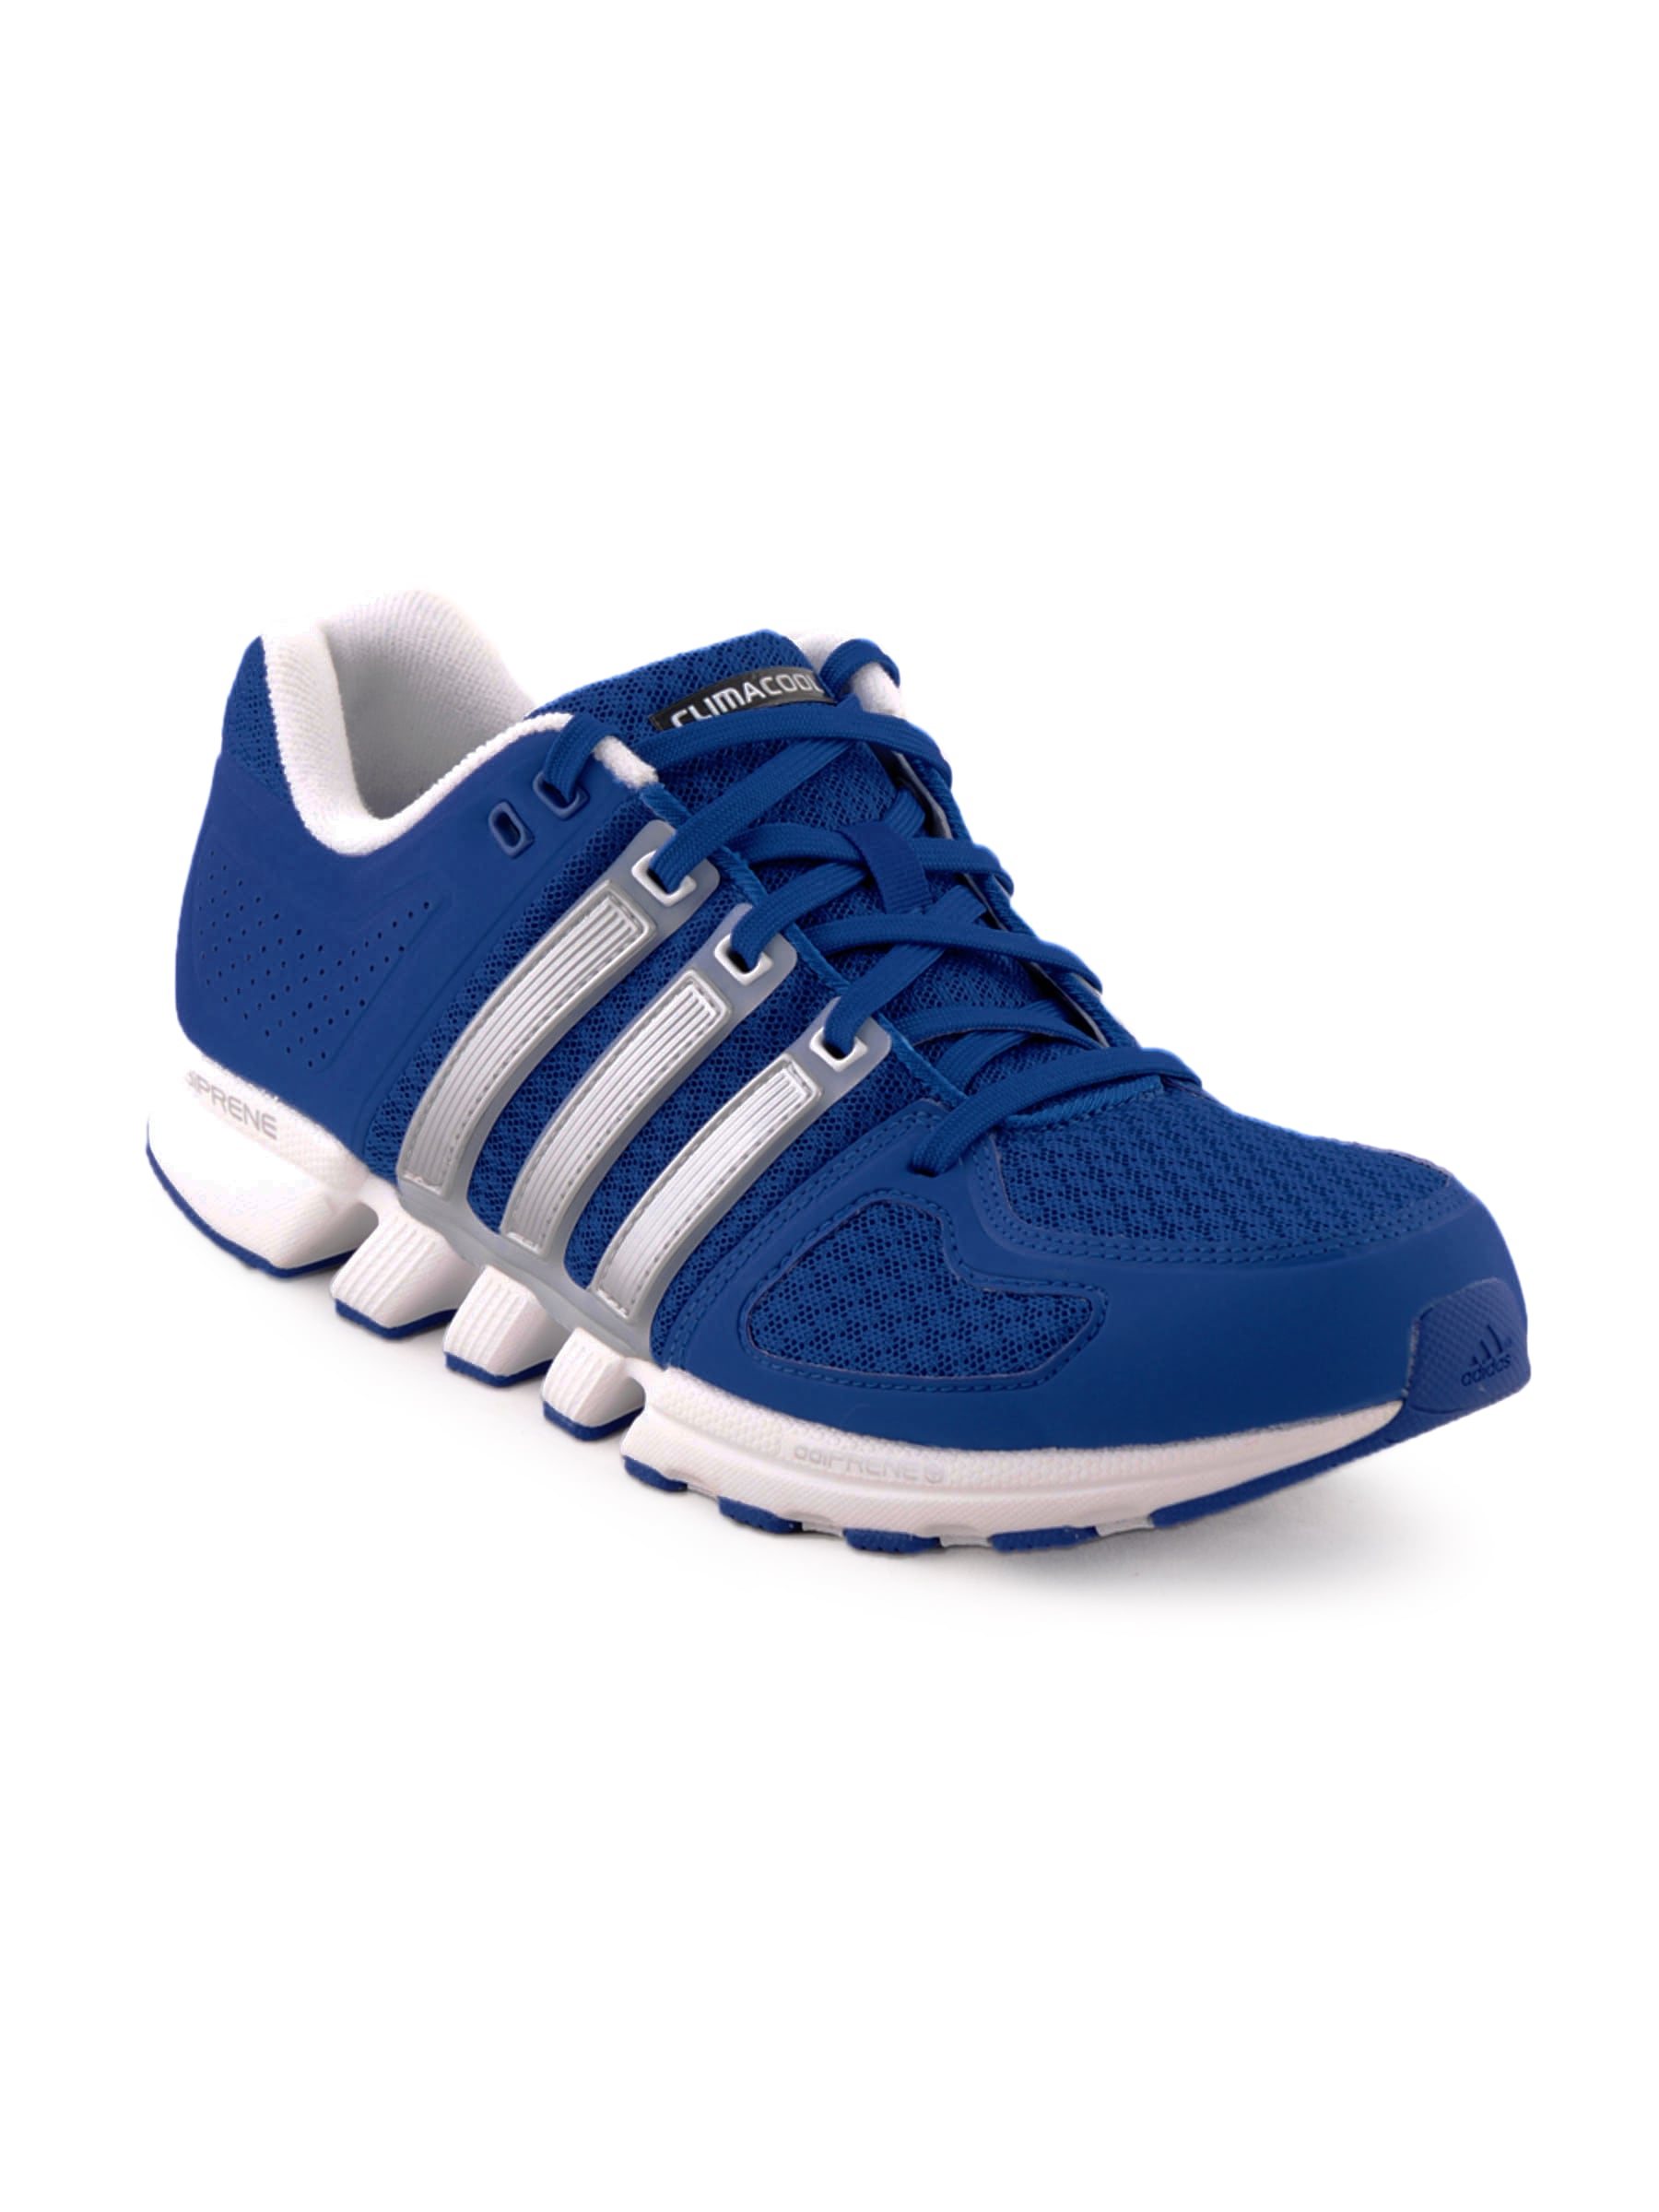 ADIDAS Men Eqt Runbox Blue Sports Shoes